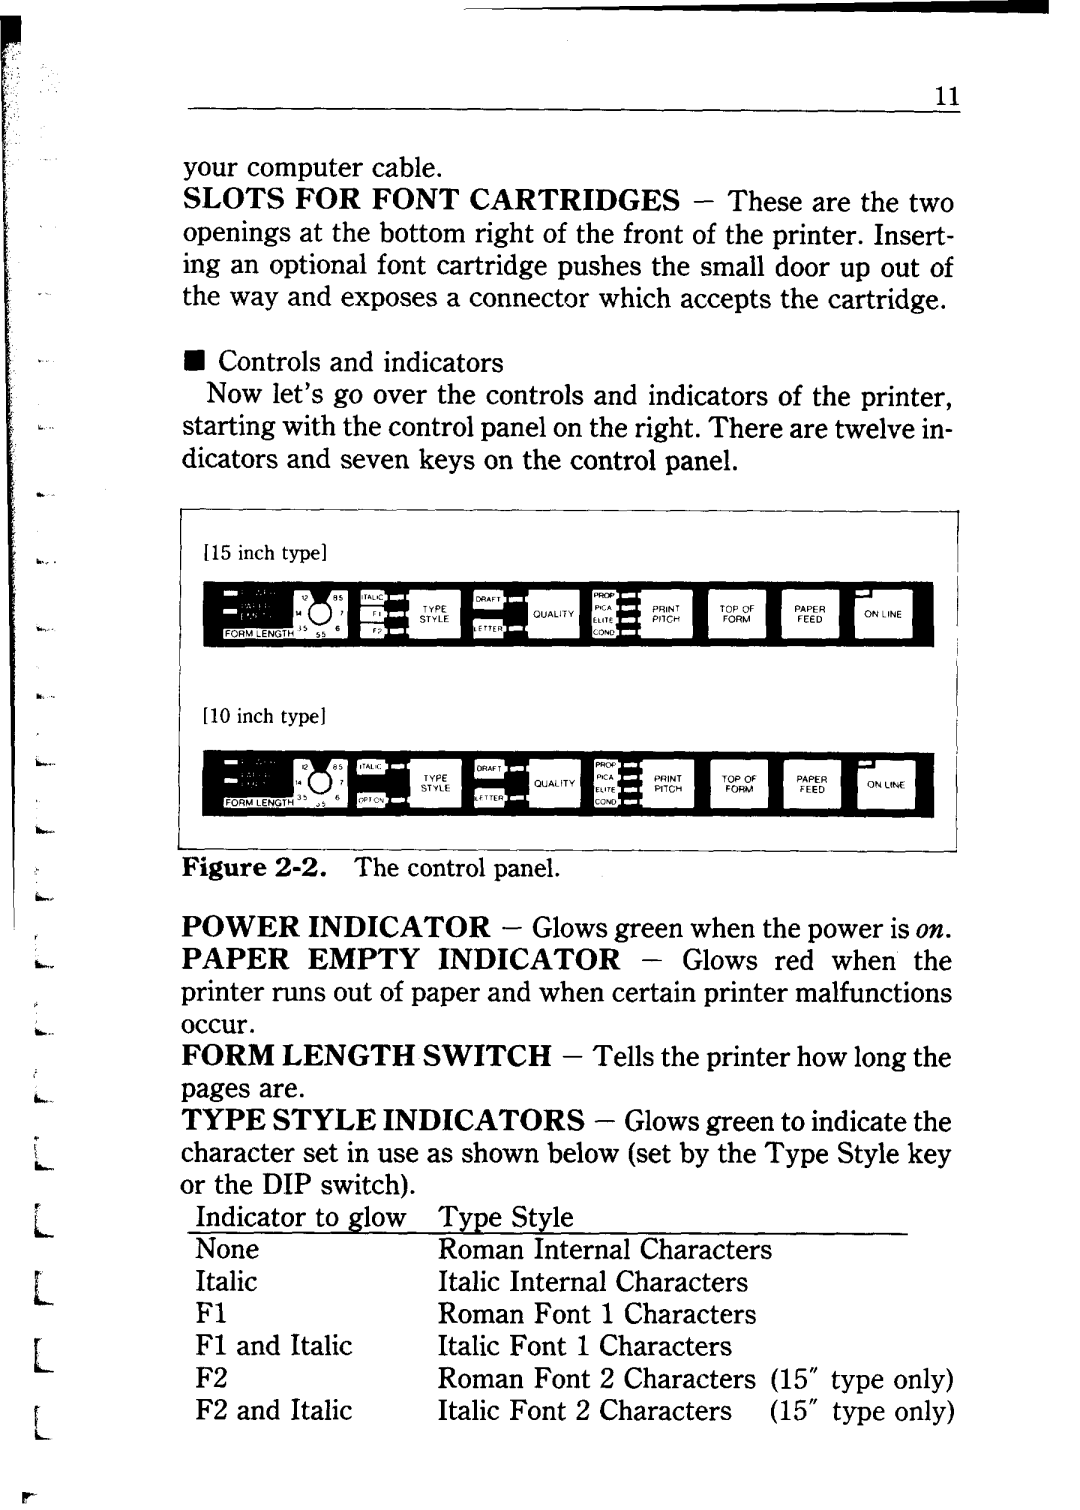 Star Micronics NB24-10/15 user manual I15 inch type1 lo inch type1 